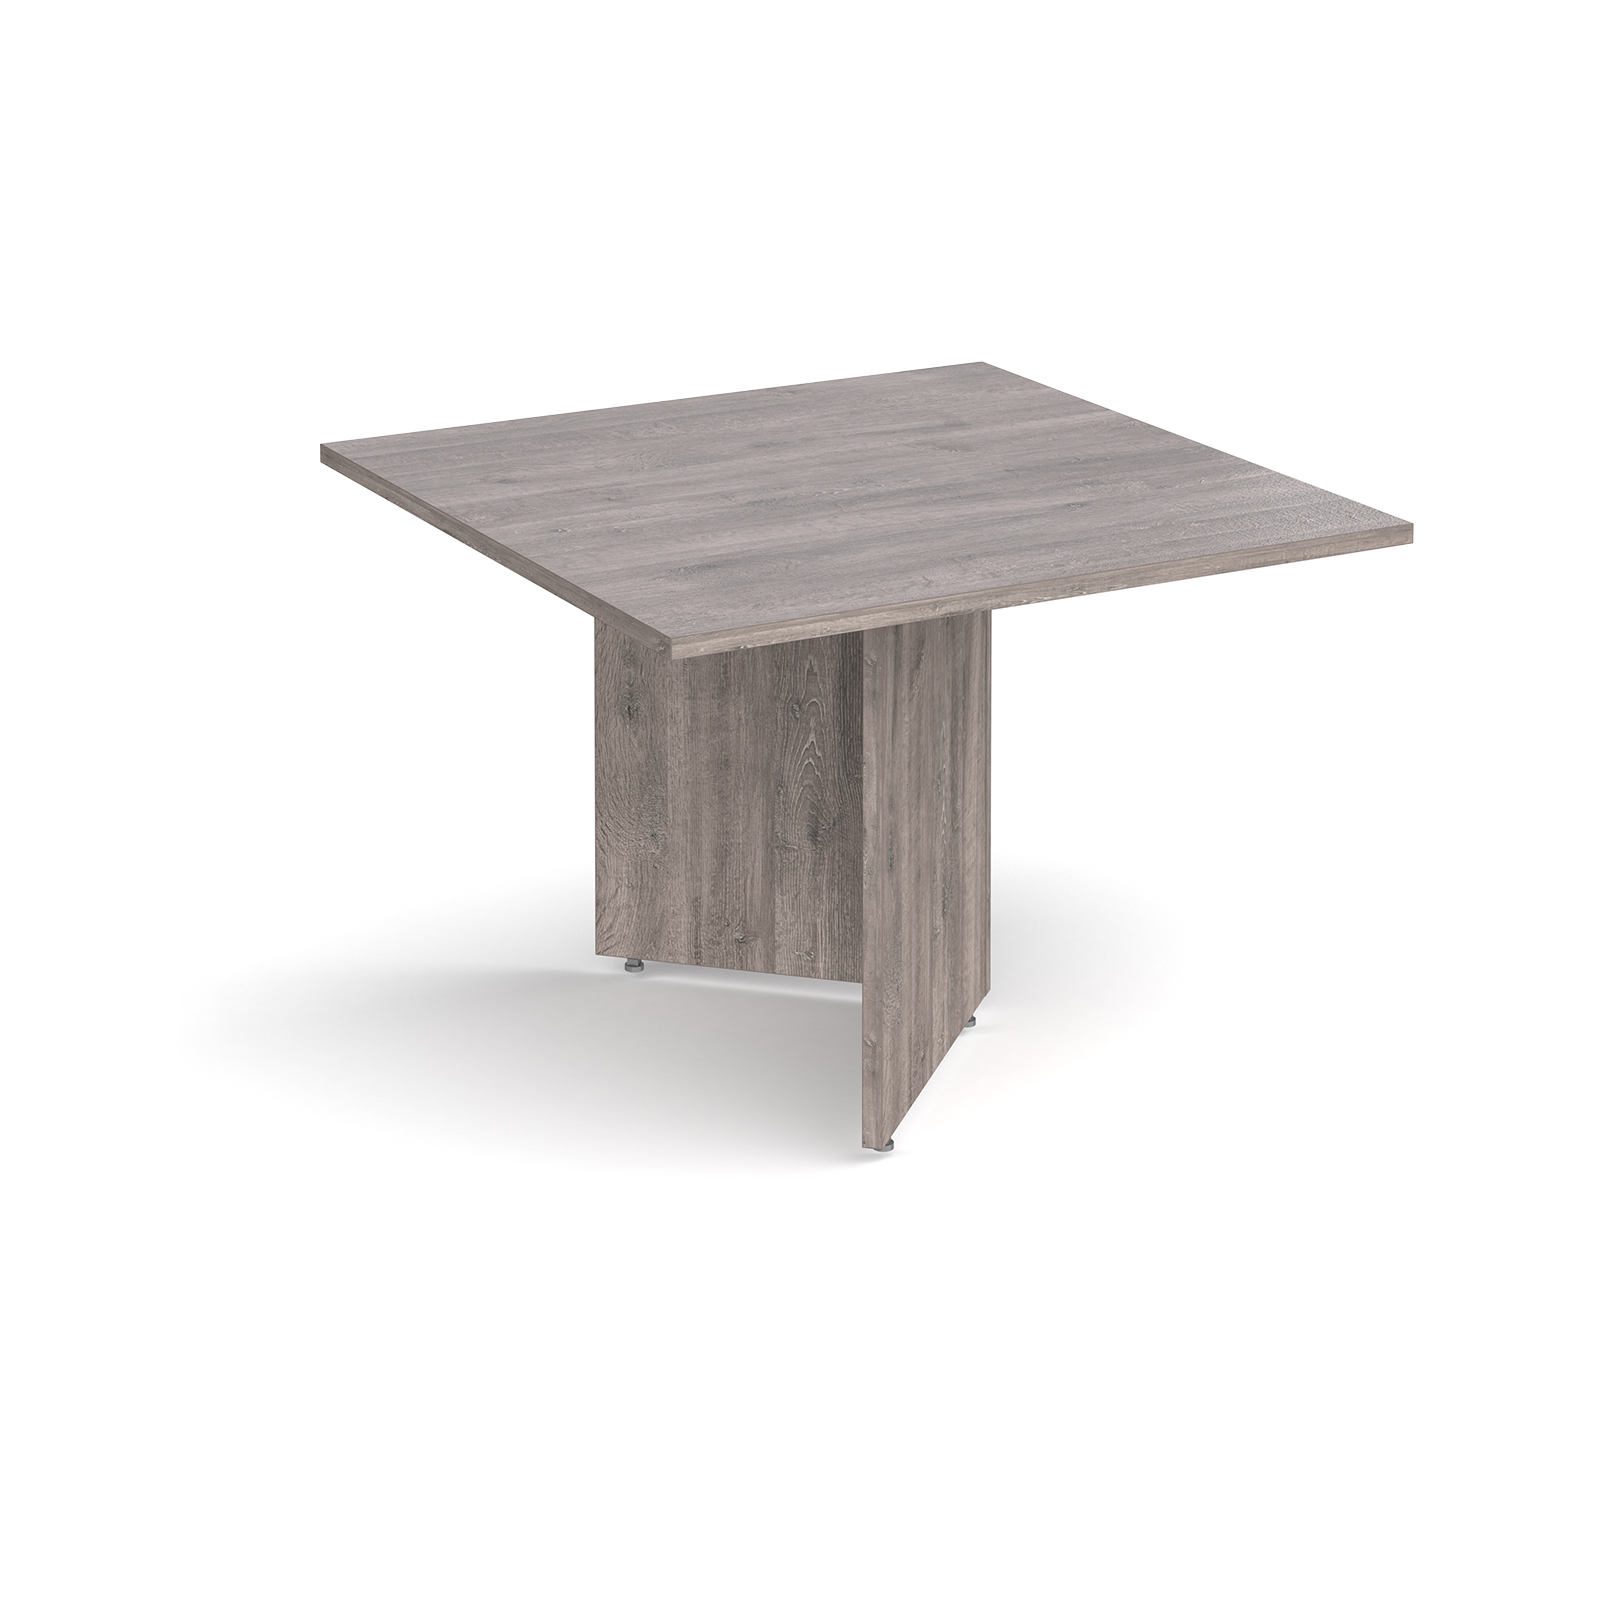 Arrow head leg square extension table